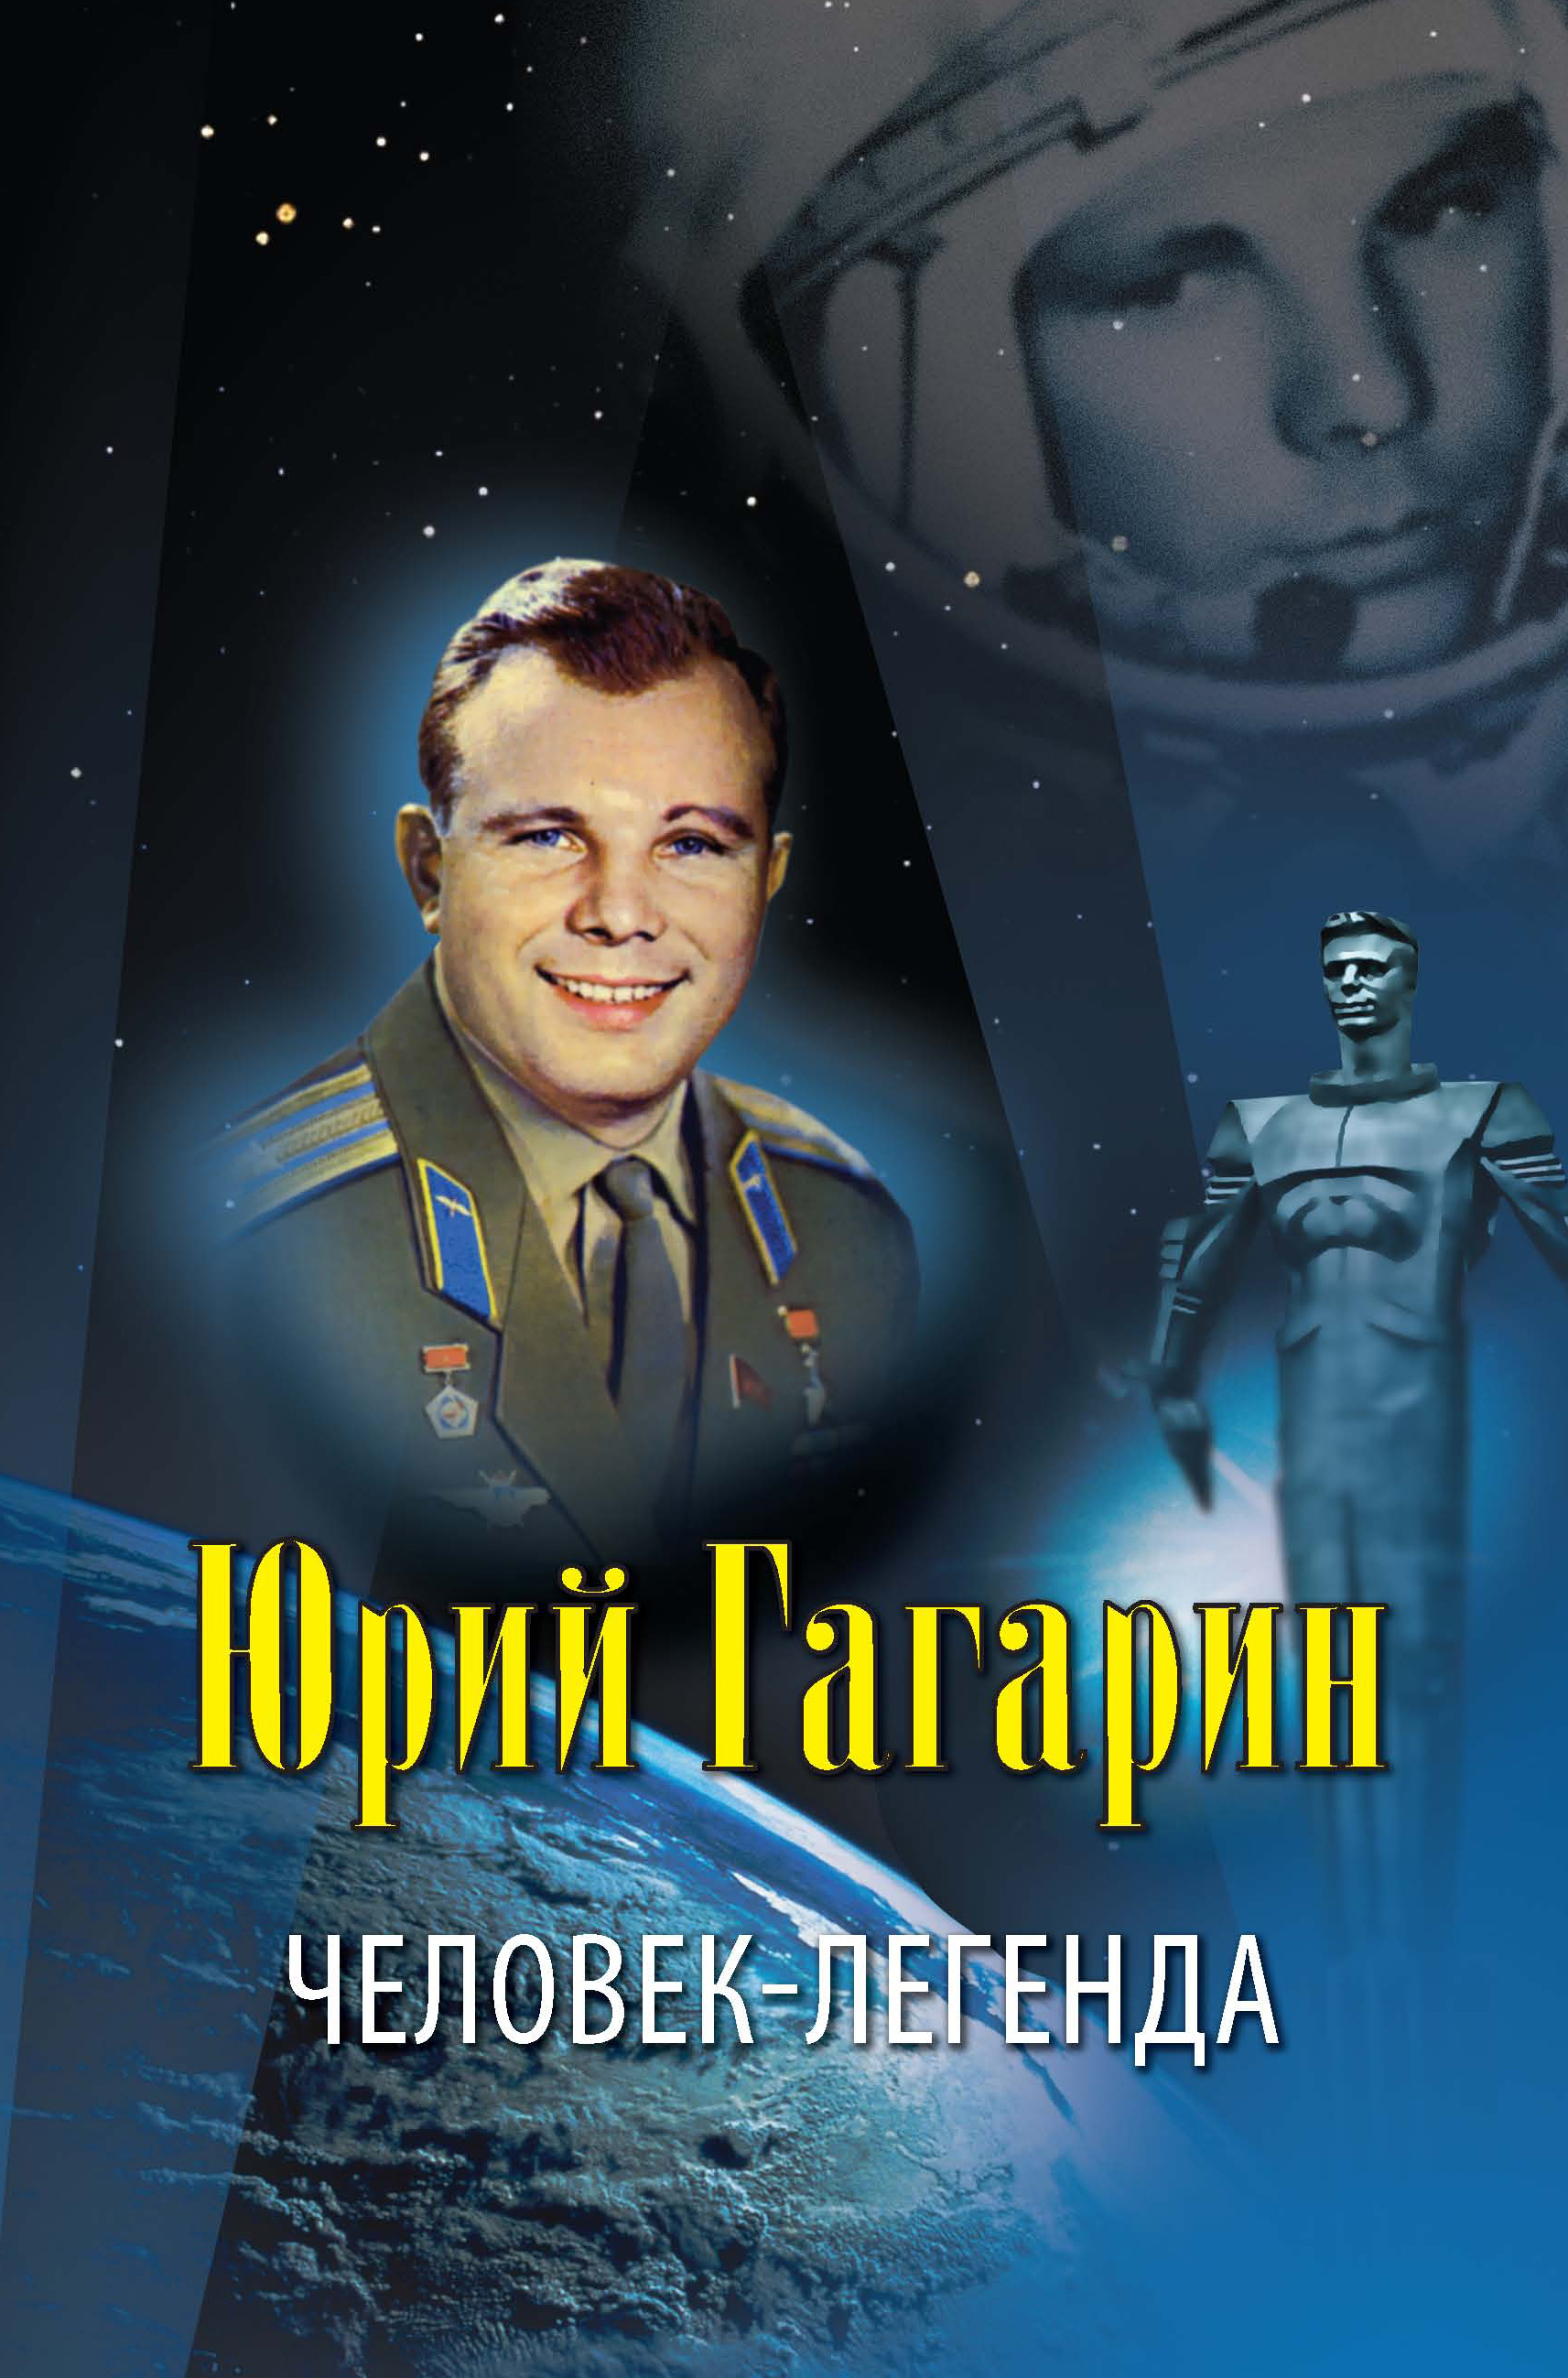 Книги про гагарина. Гагарин человек и Легенда книга.